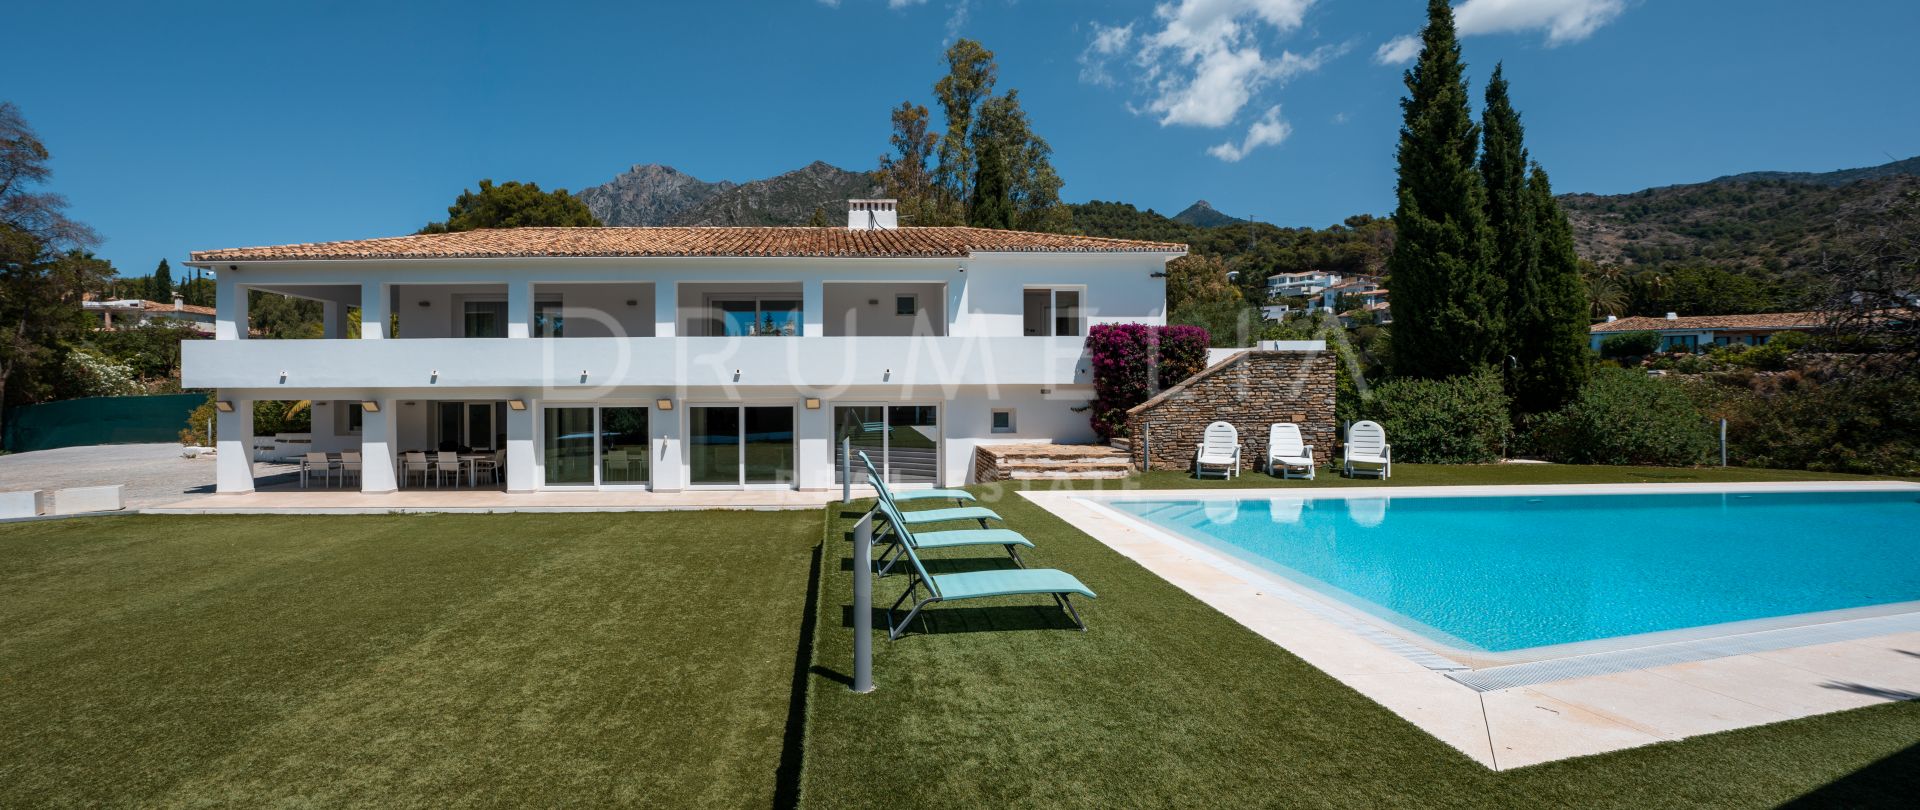 Elegante villa moderna de lujo de estilo minimalista en la Milla de Oro de Marbella